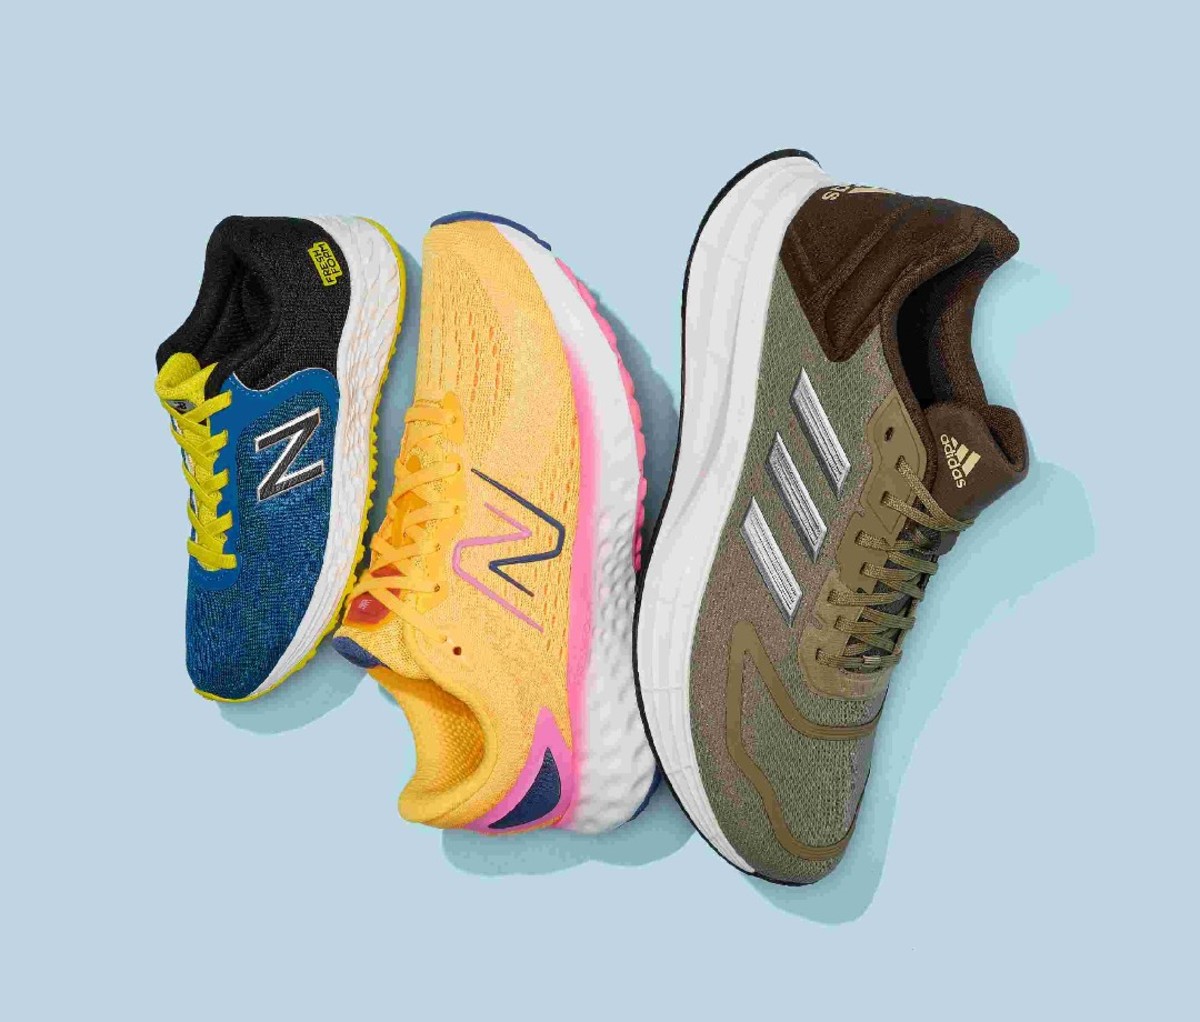 Three single running shoes